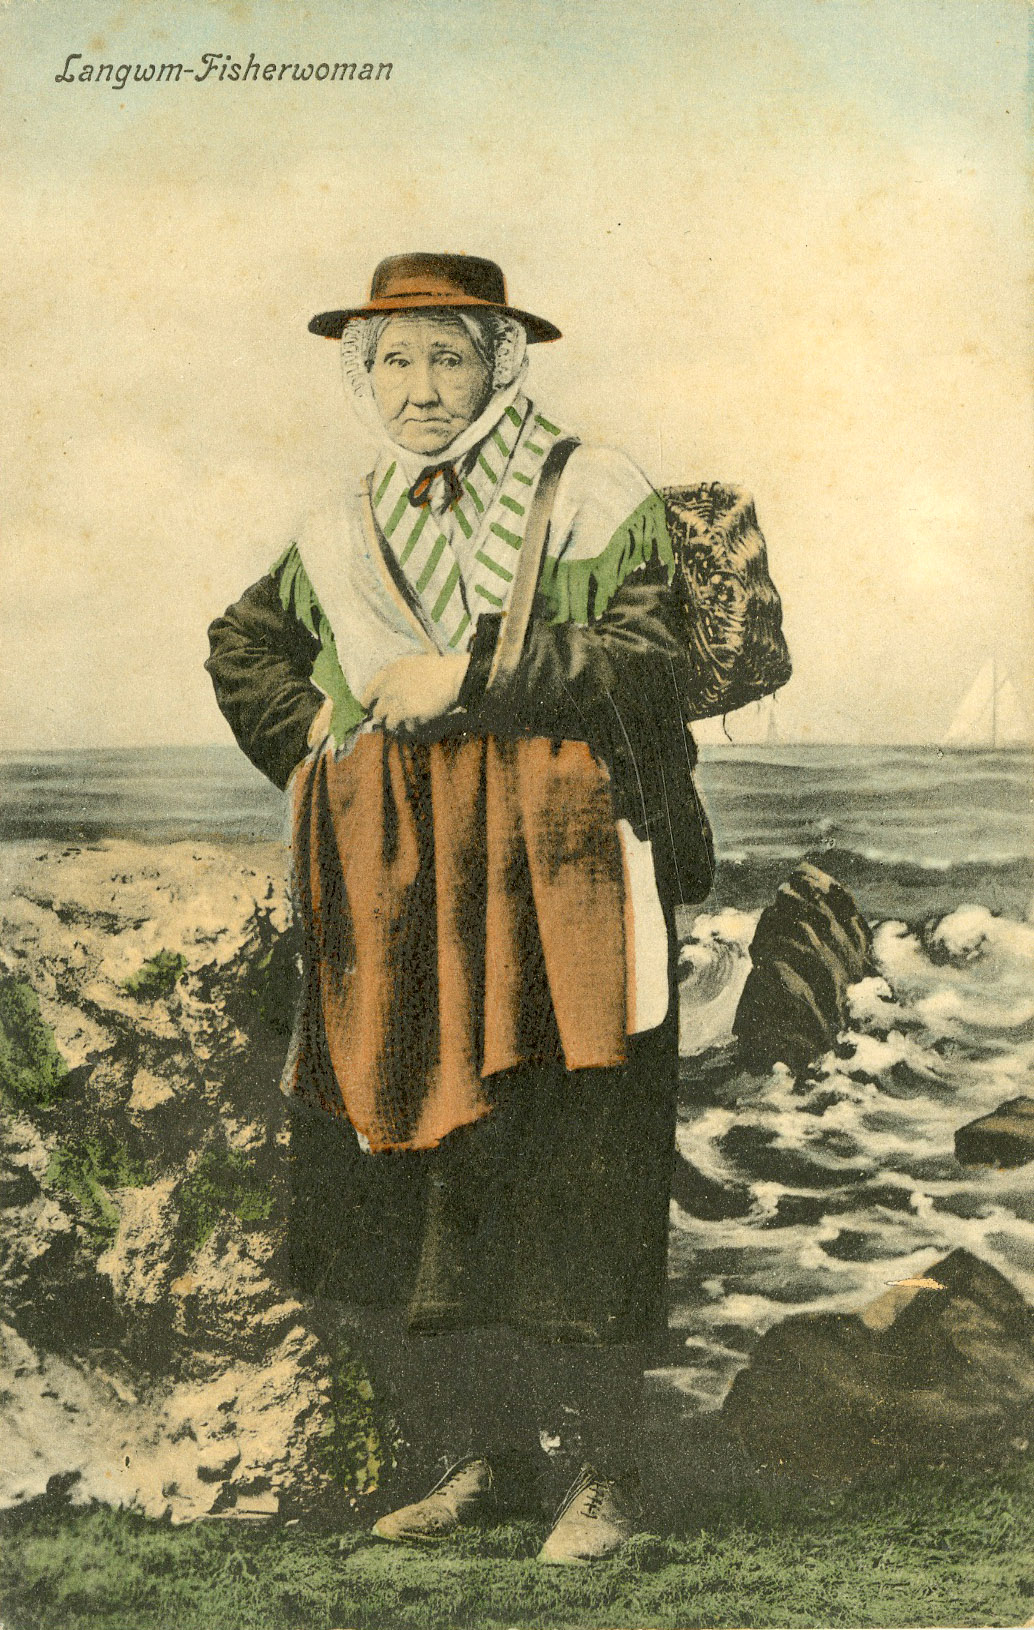 Llangwm-fisherwoman.jpg